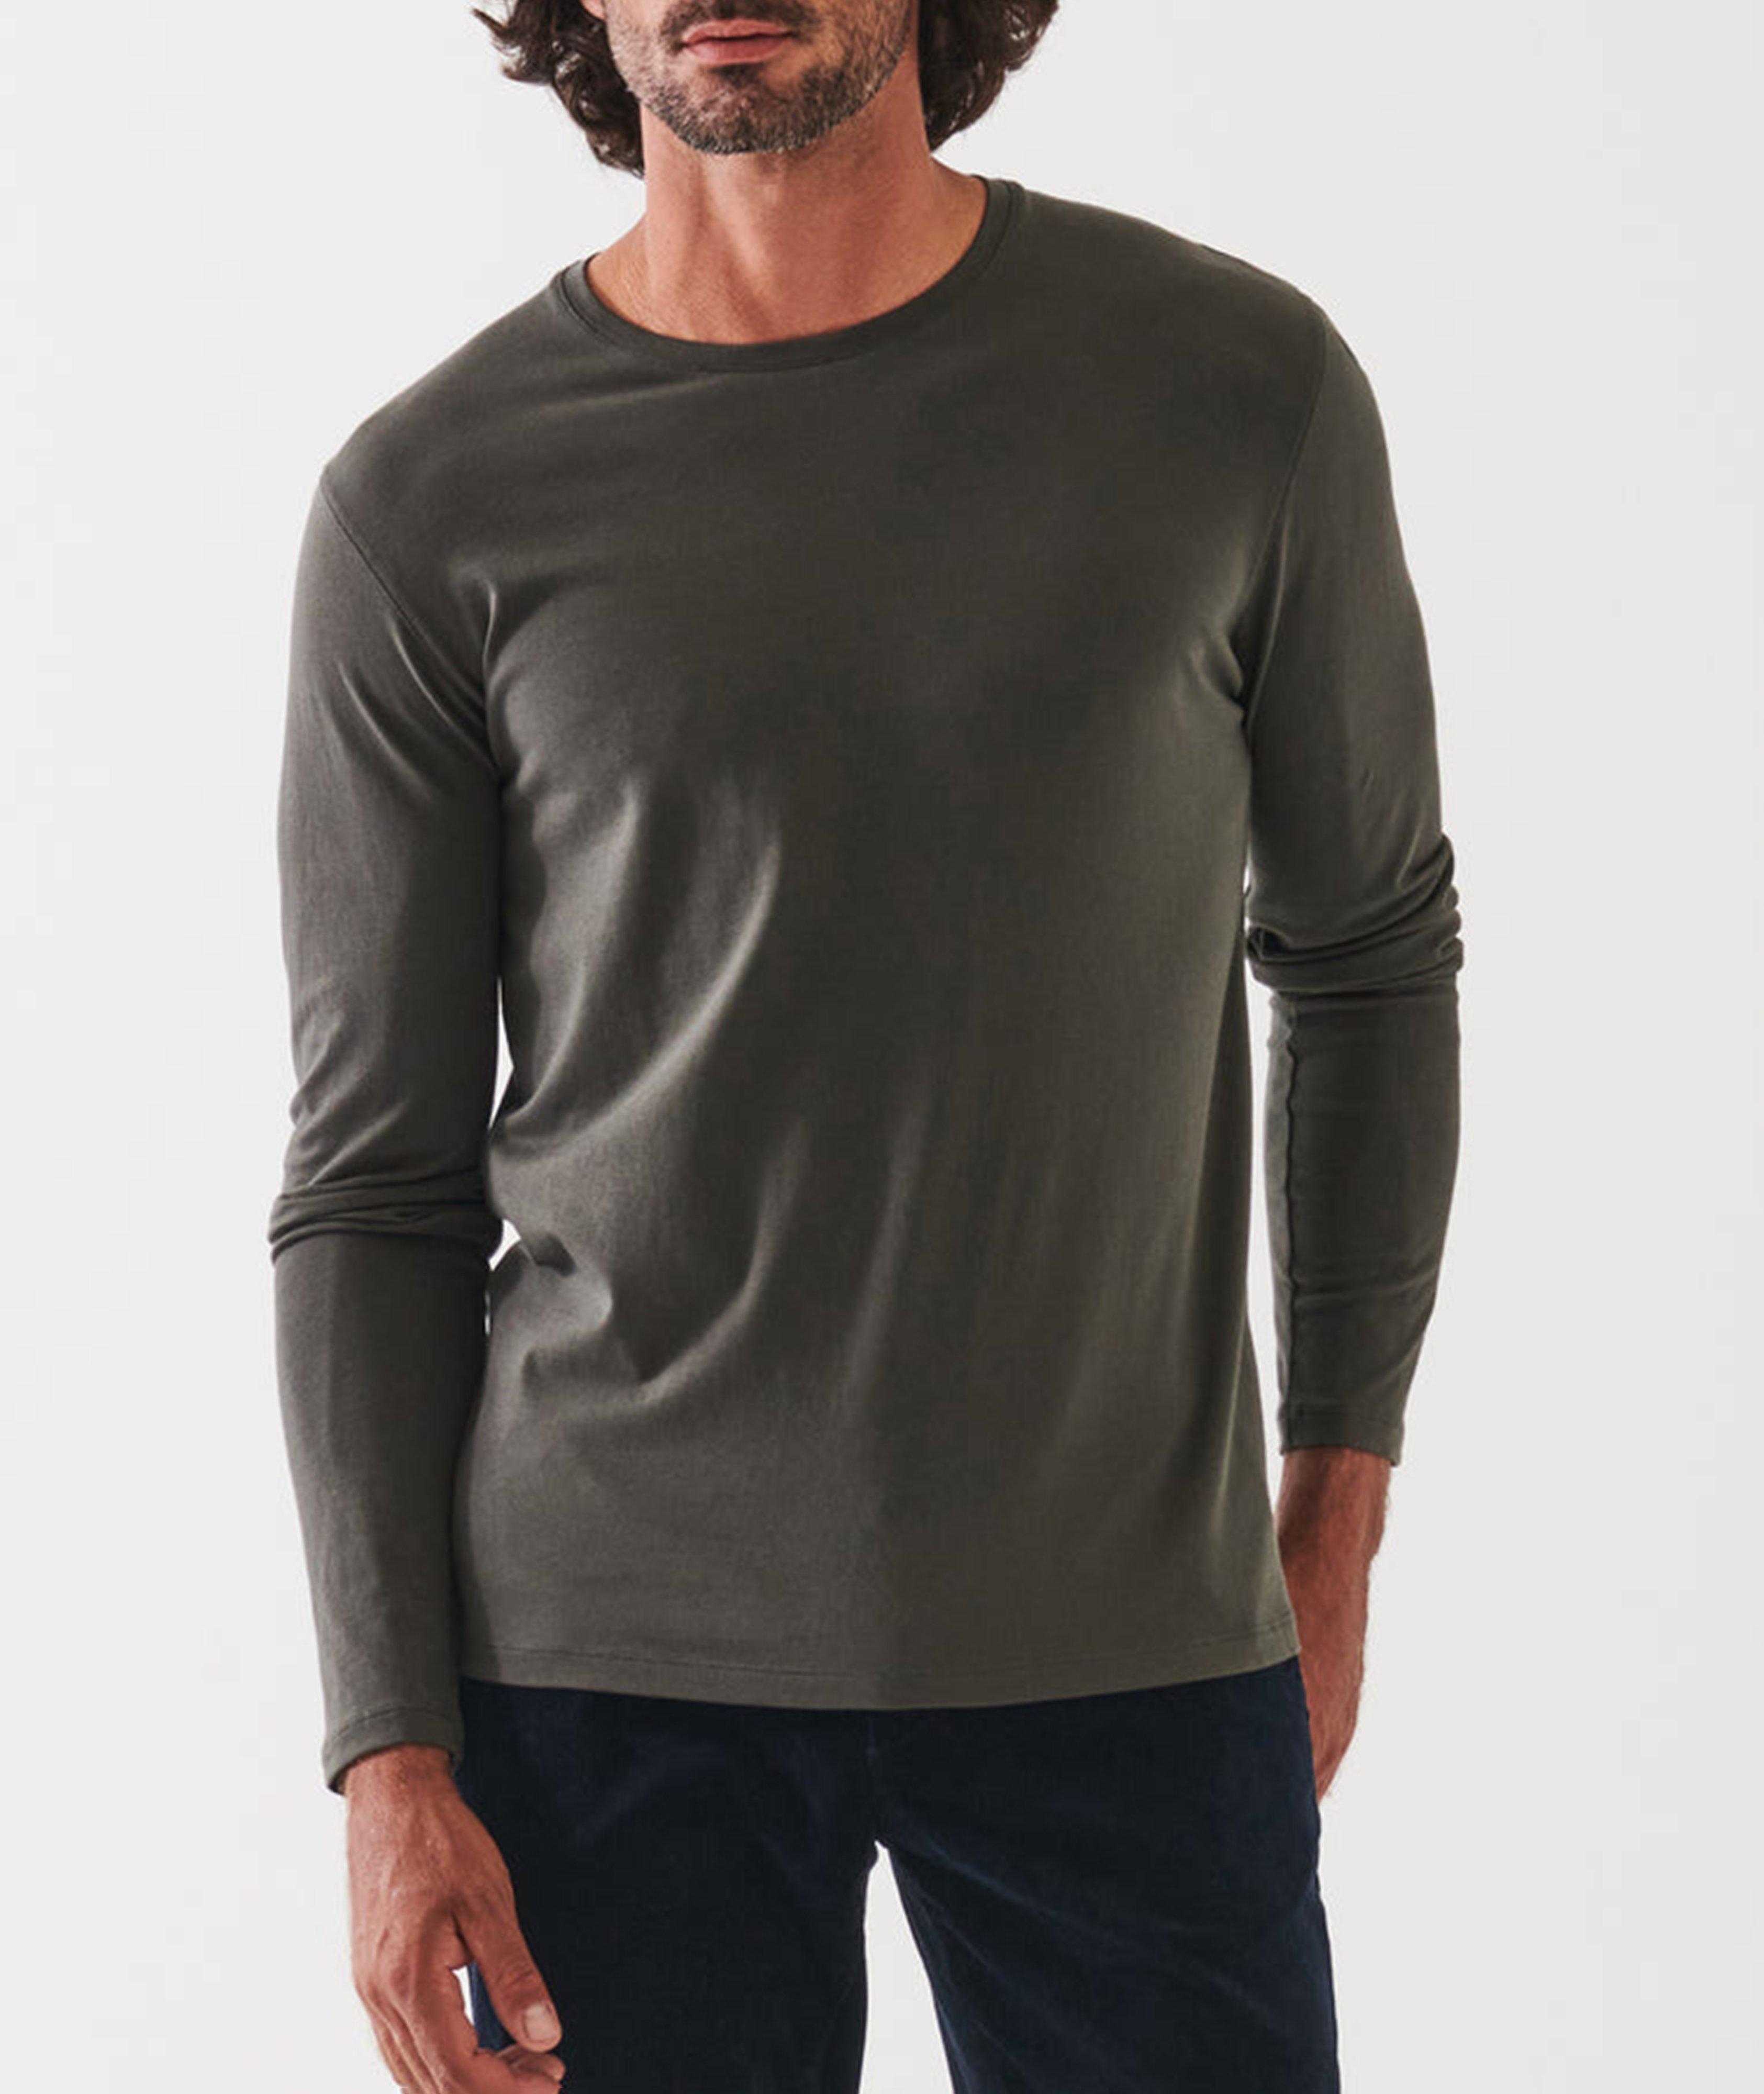 Long-Sleeve Stretch-Pima Cotton T-Shirt image 0